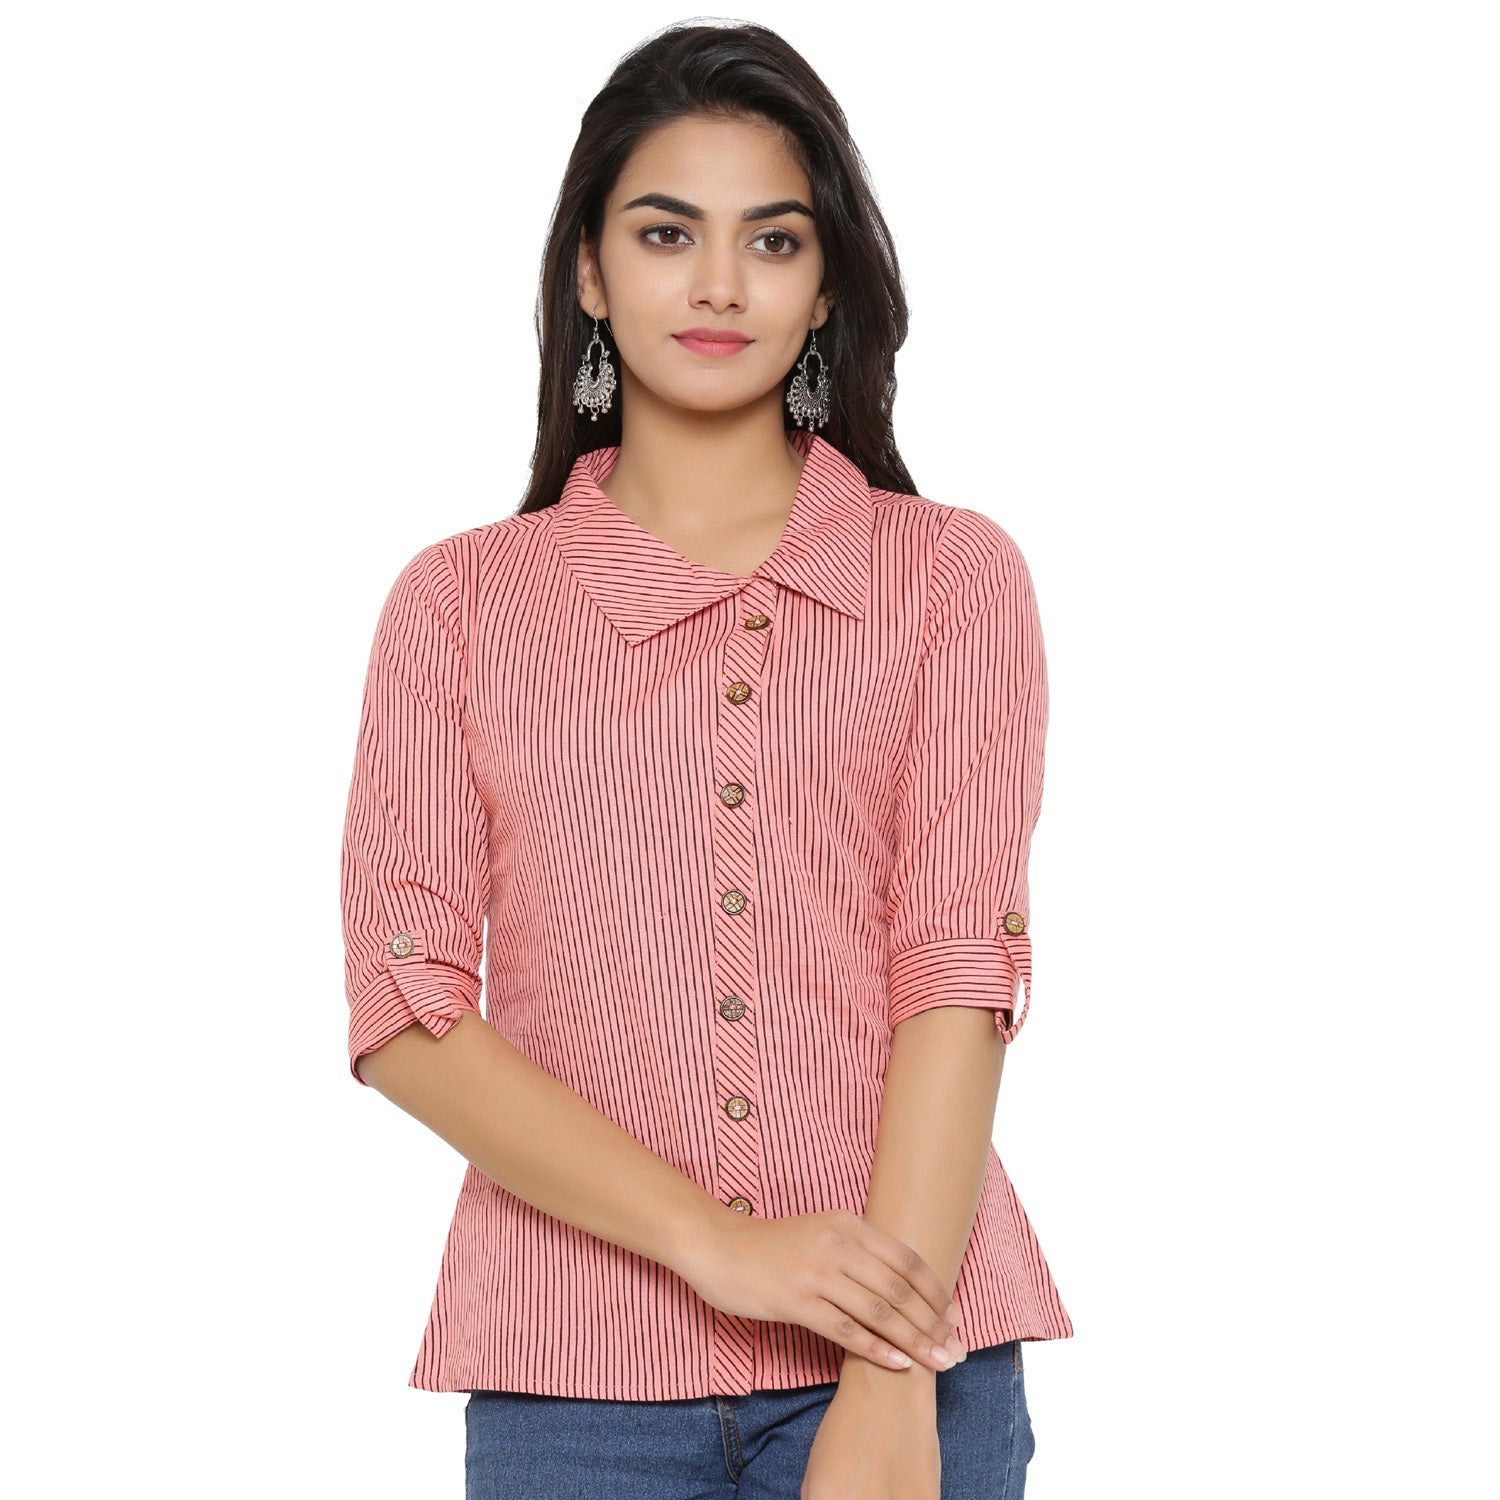  Cotton Slub Printed Shirt Style Top (Pink)